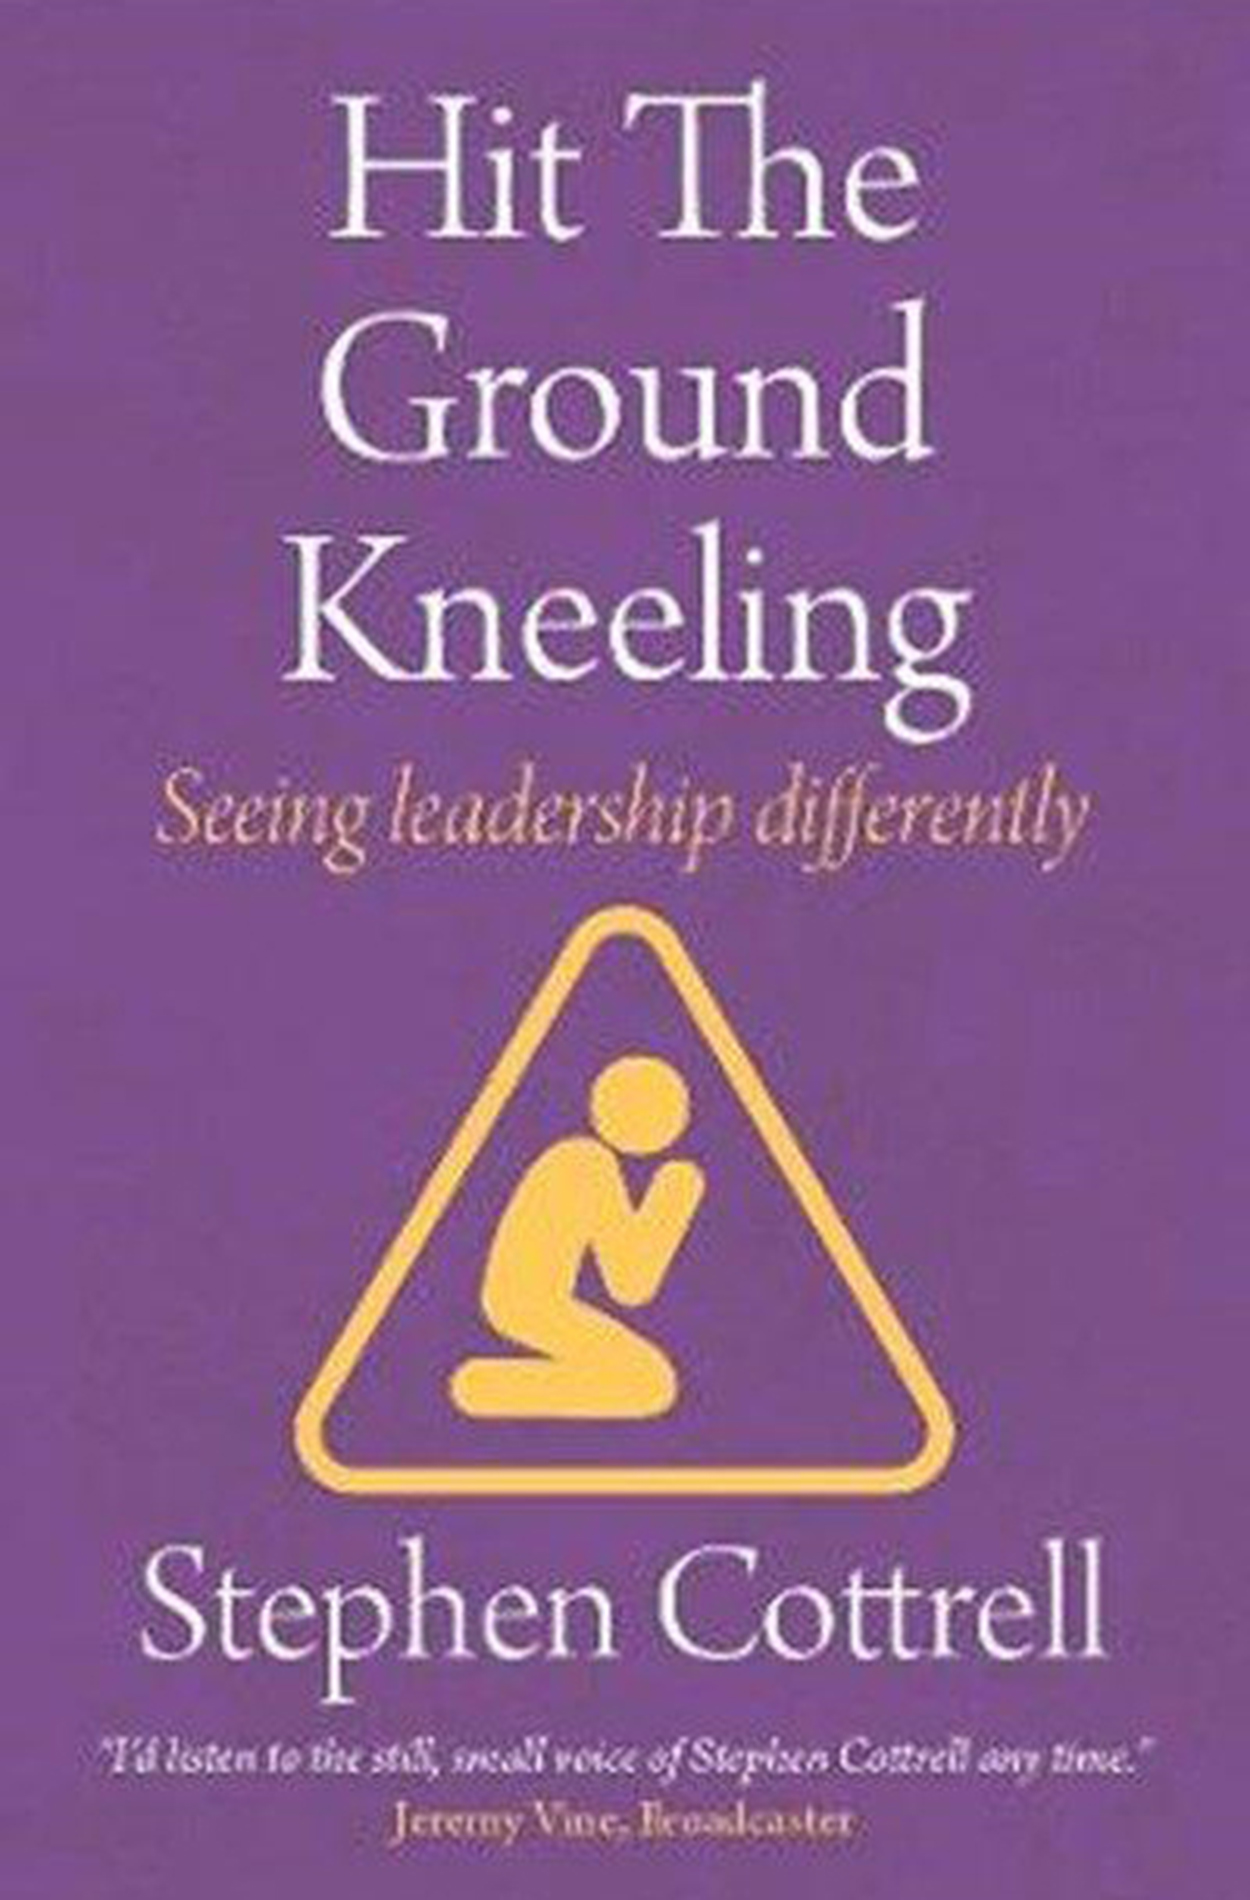 Hit The Ground Kneeling – Seeing leadership differently